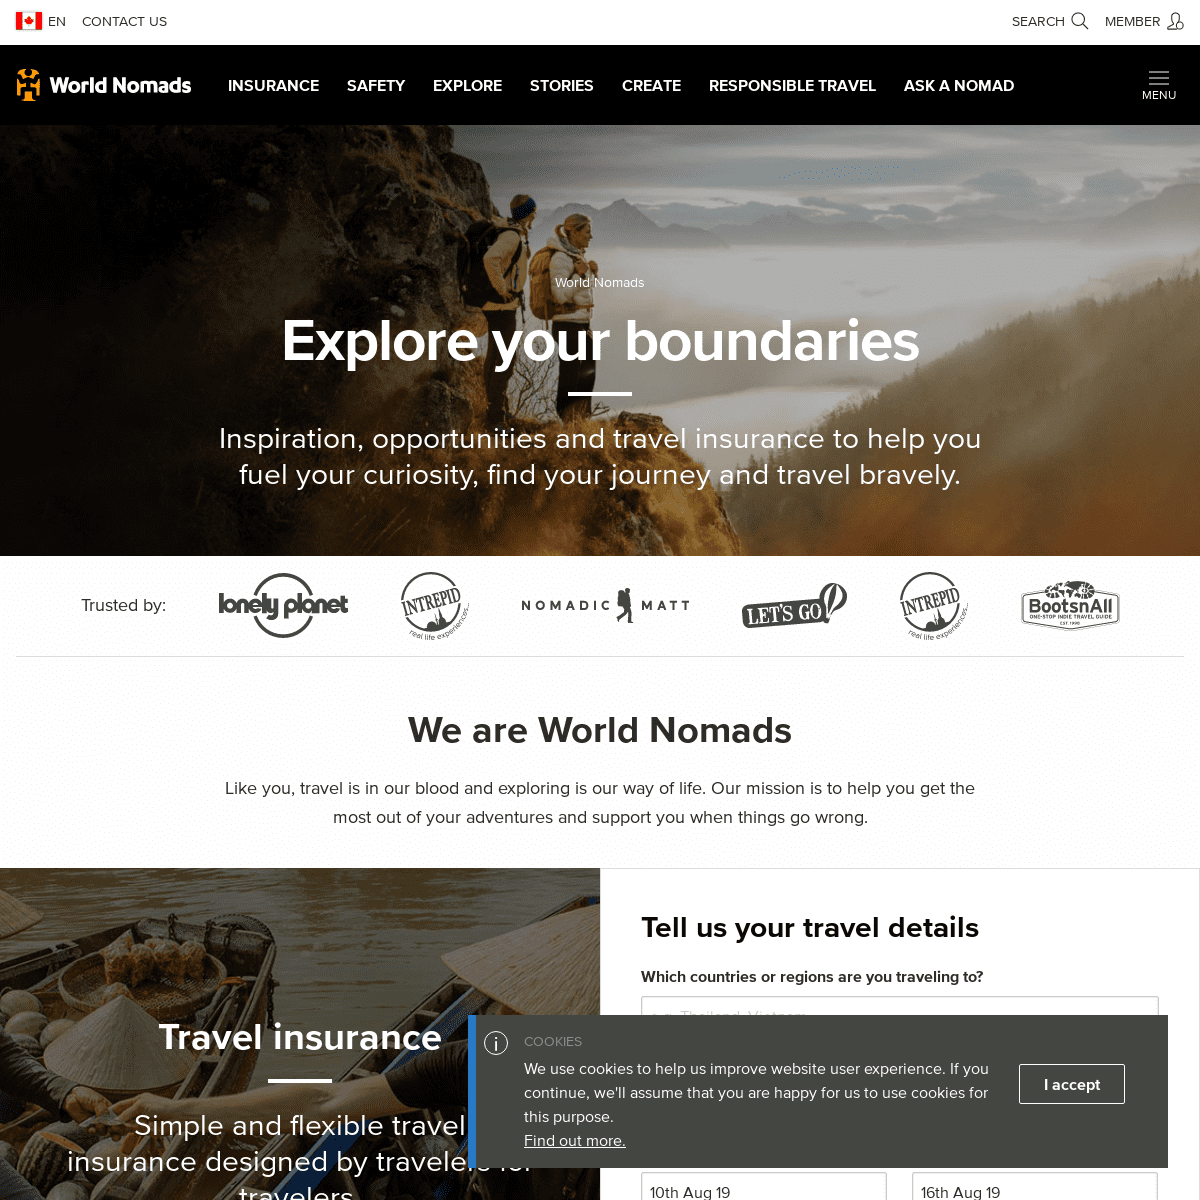 World Nomads - Explore Your Boundaries